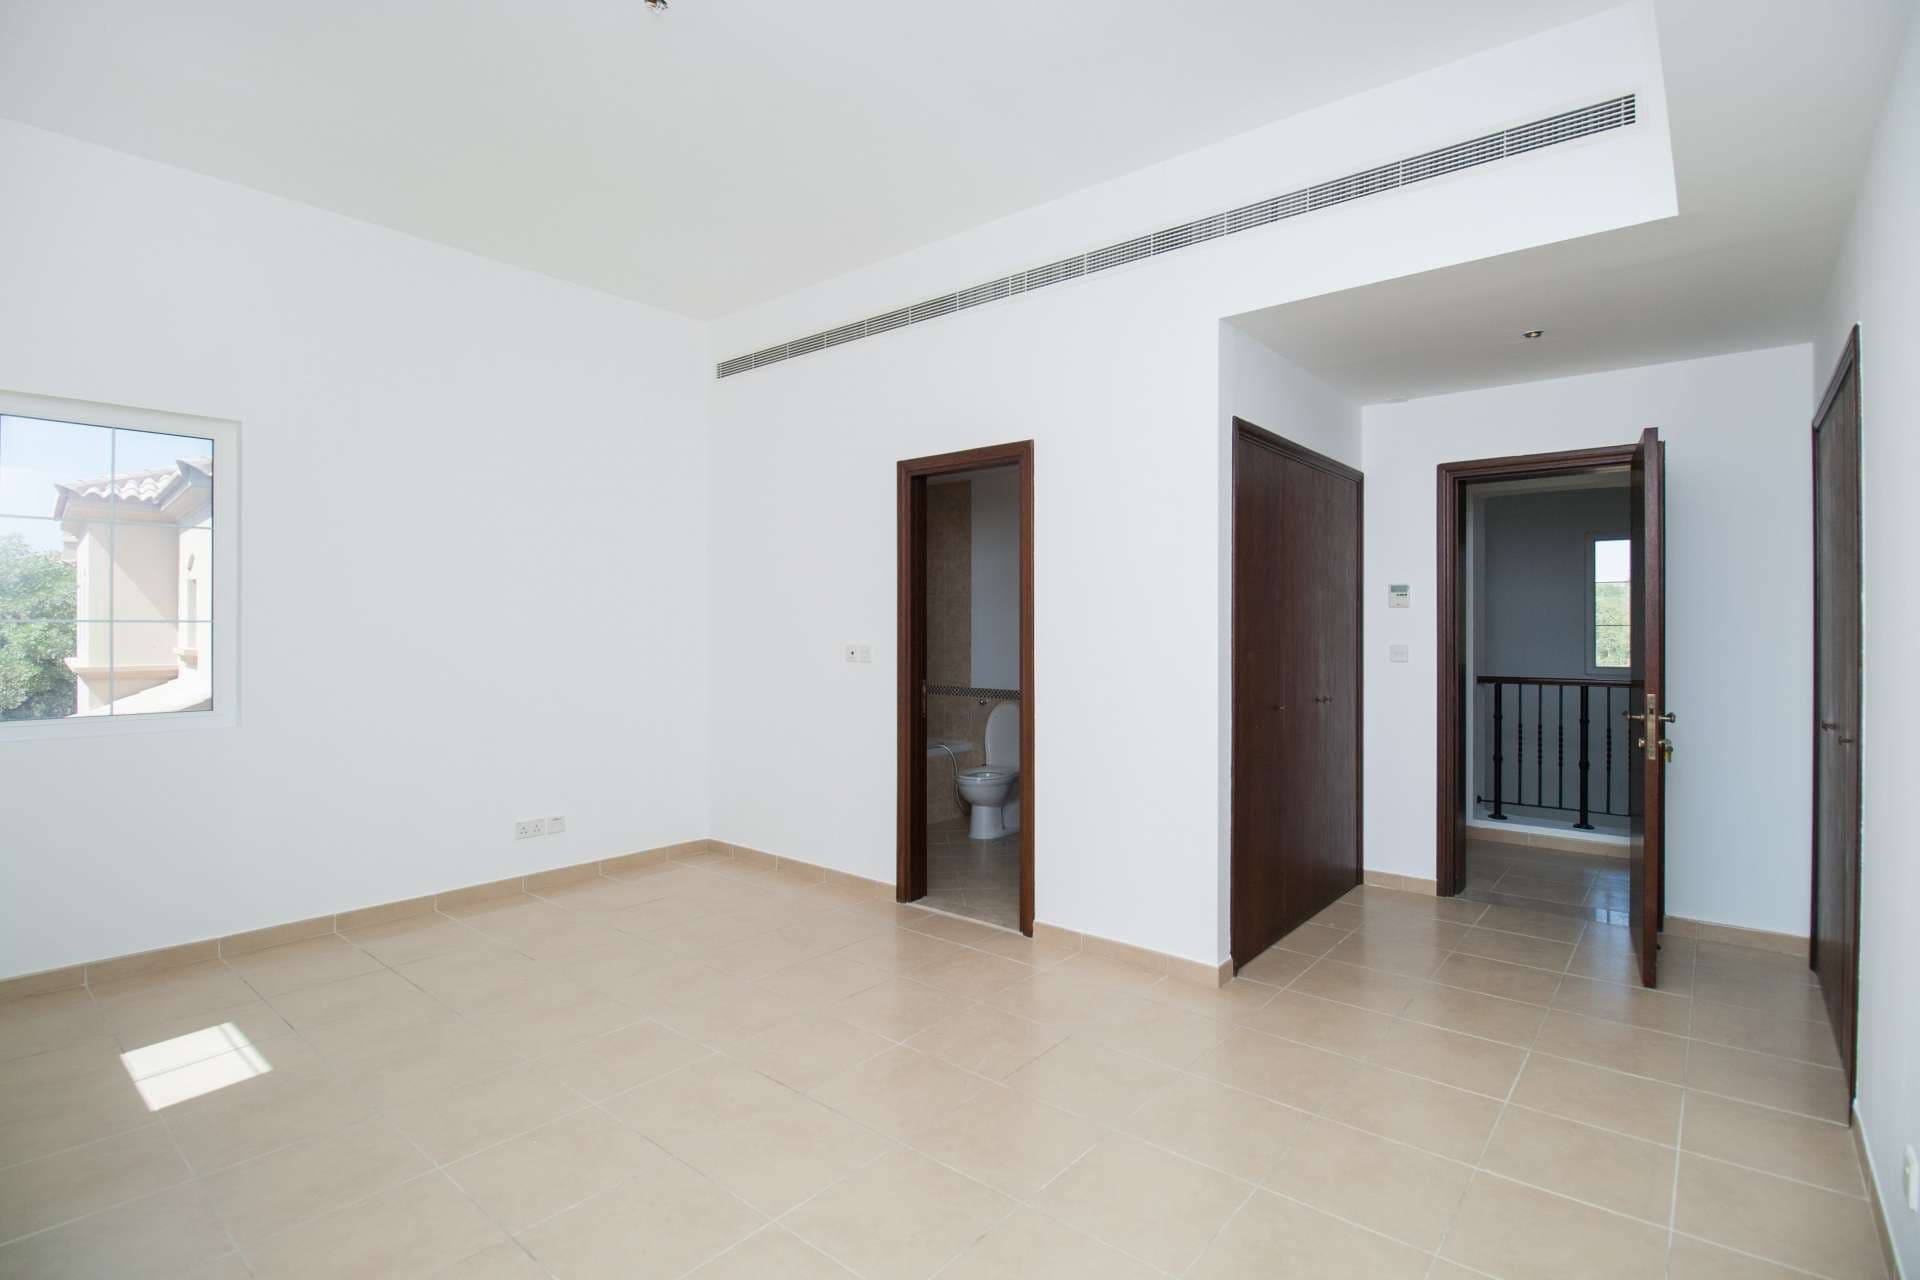 5 Bedroom Villa For Rent Alvorada Lp04851 2c159e3b11ef1800.jpg